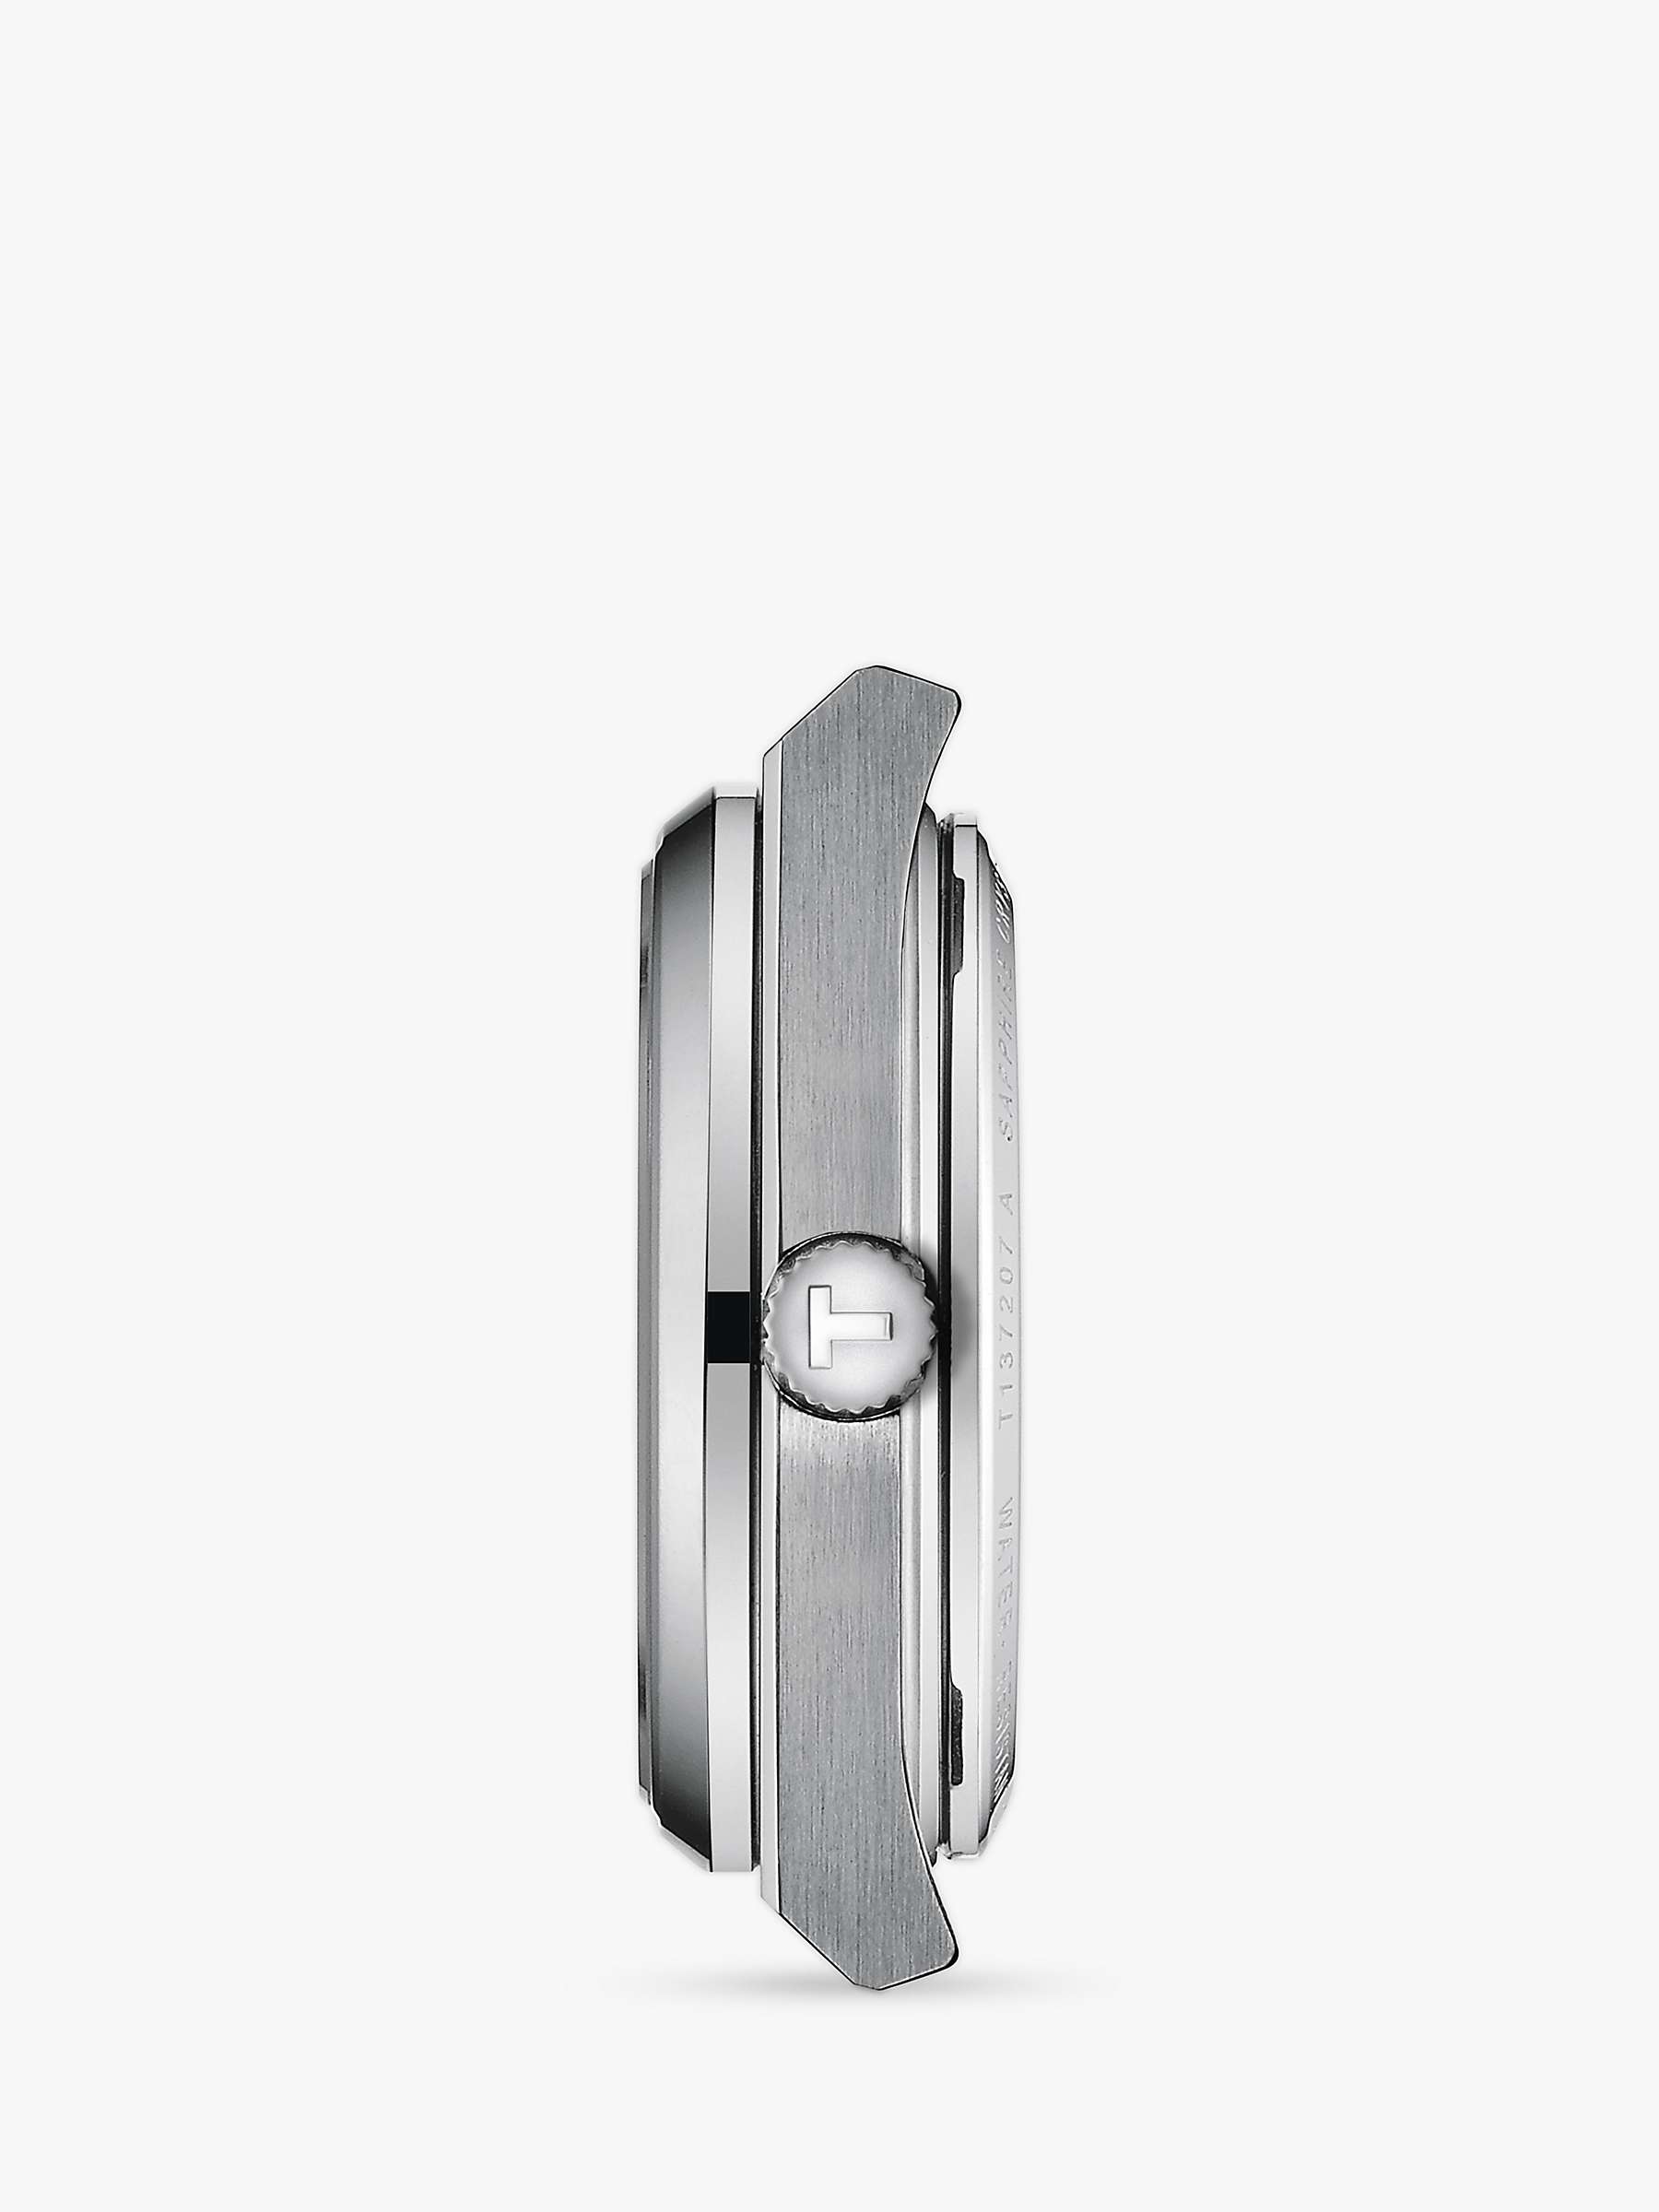 Buy Tissot T1372071135100 Unisex PRX Powermatic 80 Automatic Date Bracelet Strap Watch, Silver/Ice Blue Online at johnlewis.com